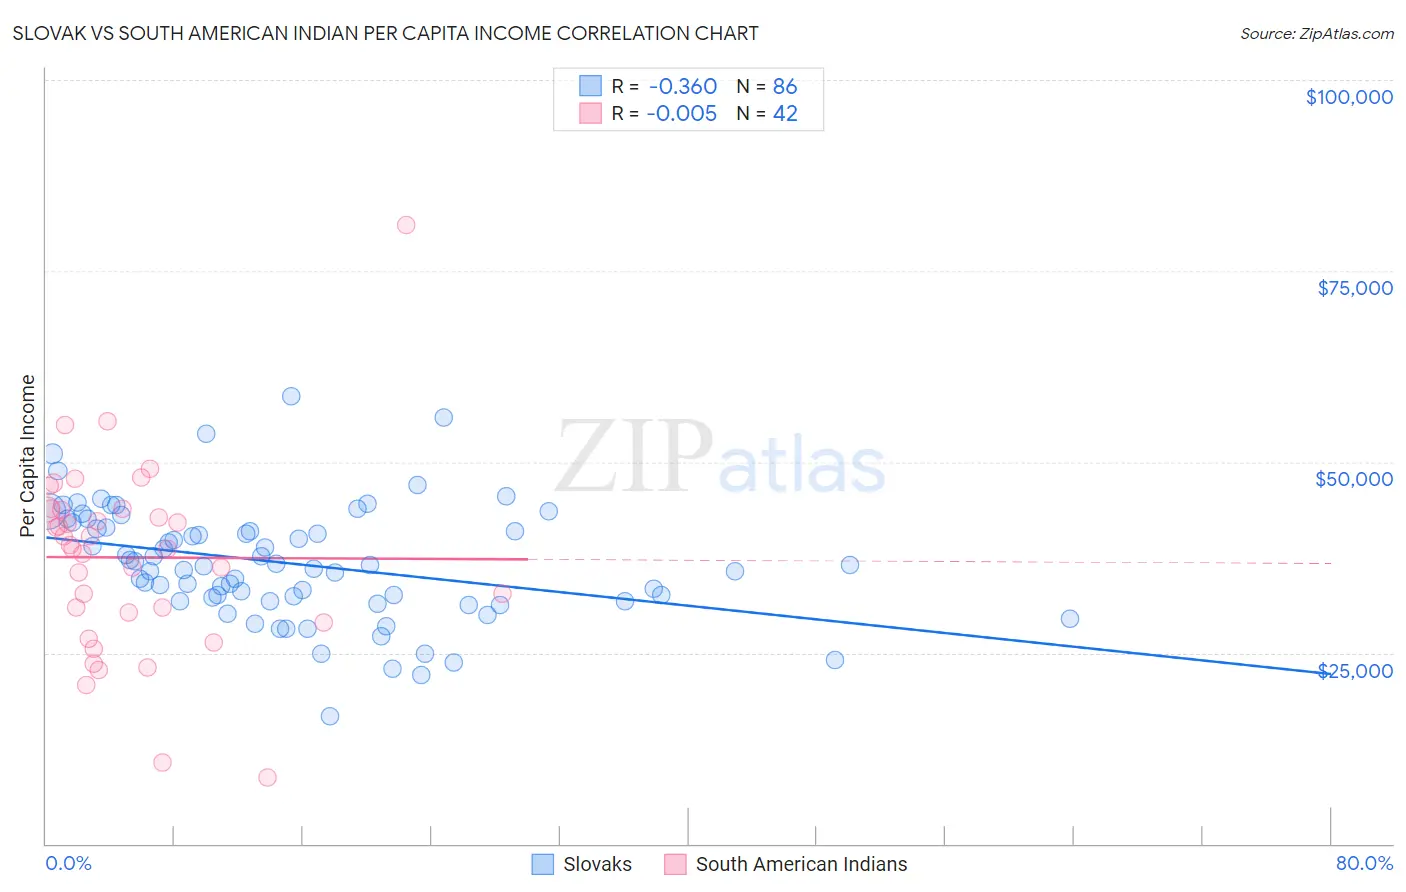 Slovak vs South American Indian Per Capita Income